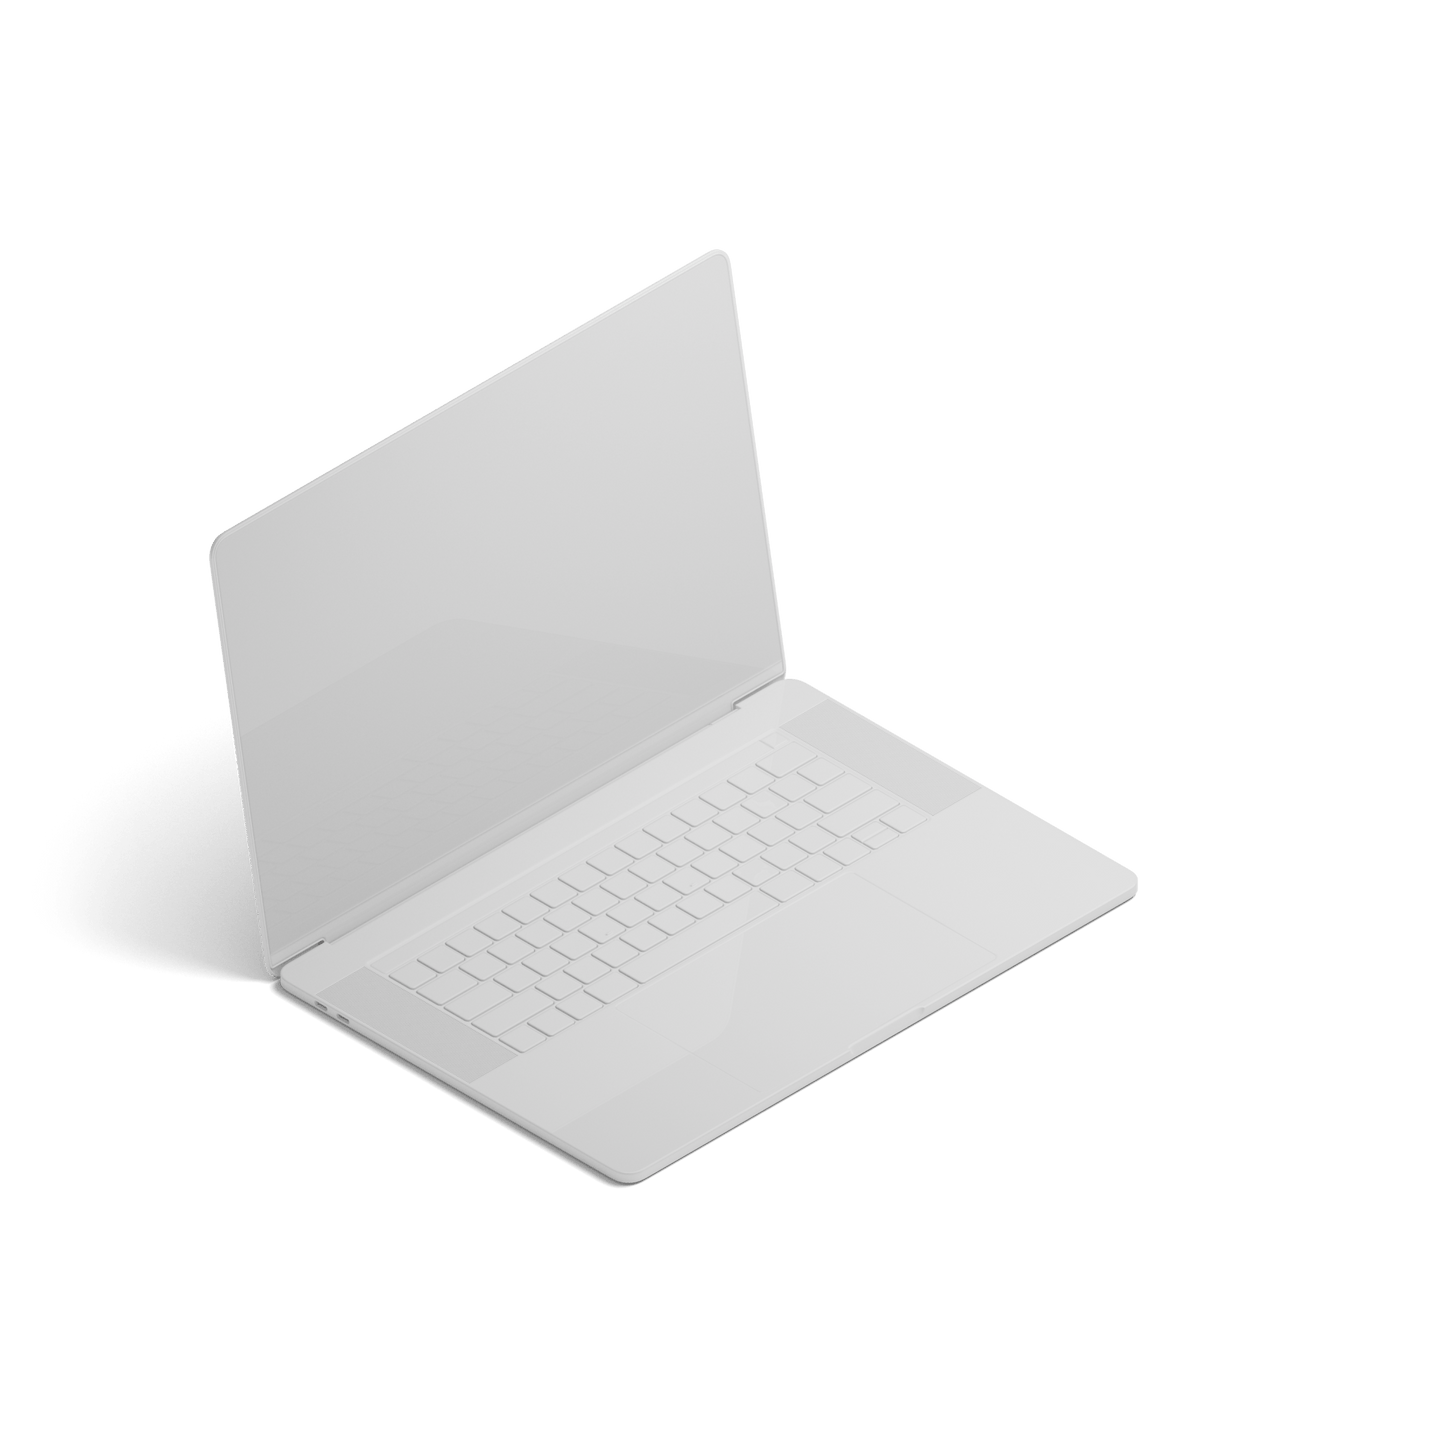 Laptop 2 - TCA Ninja